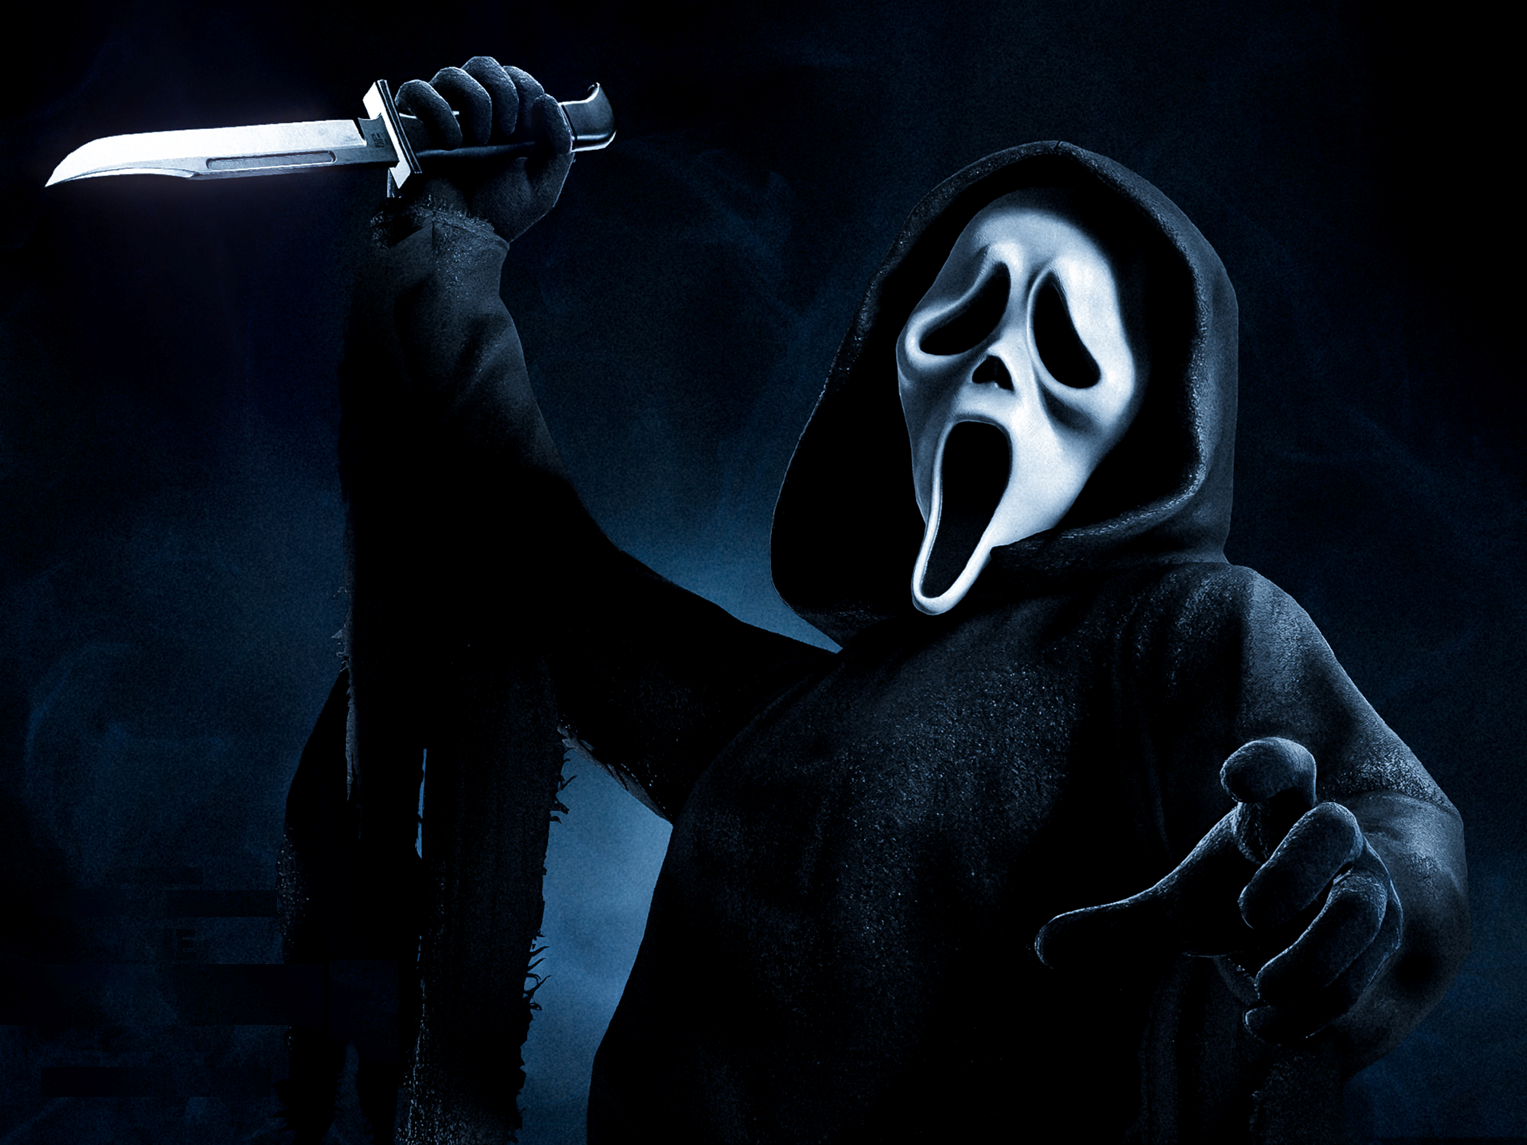 Wallpaper Scream Mask Knife Dead by Daylight Ghost face images for  desktop section игры  download